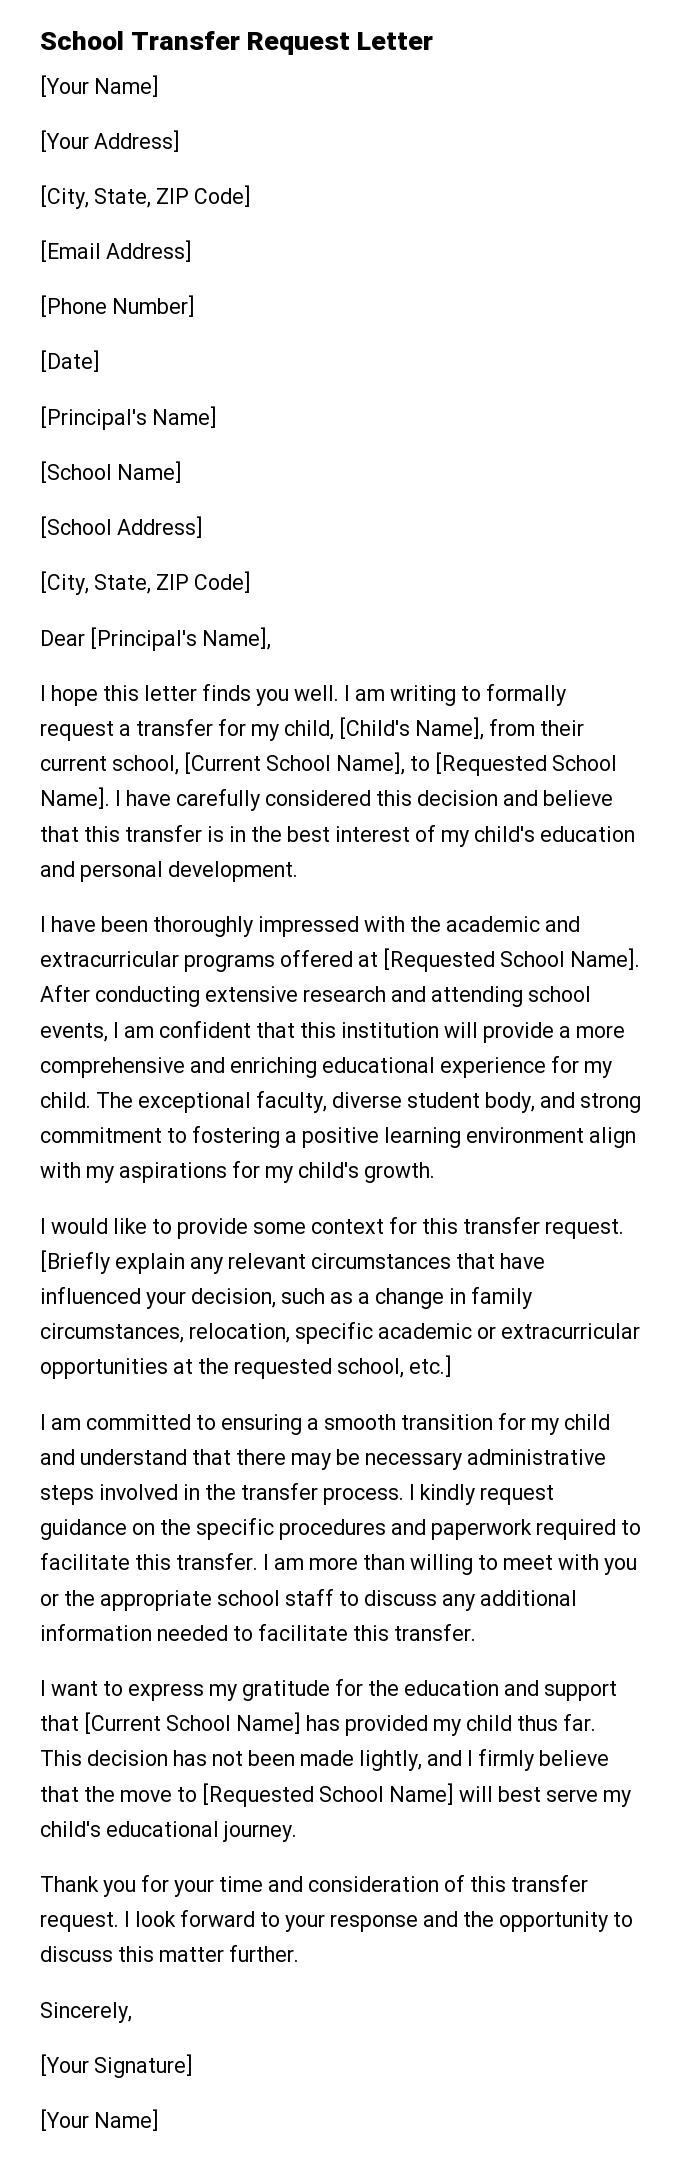 School Transfer Request Letter